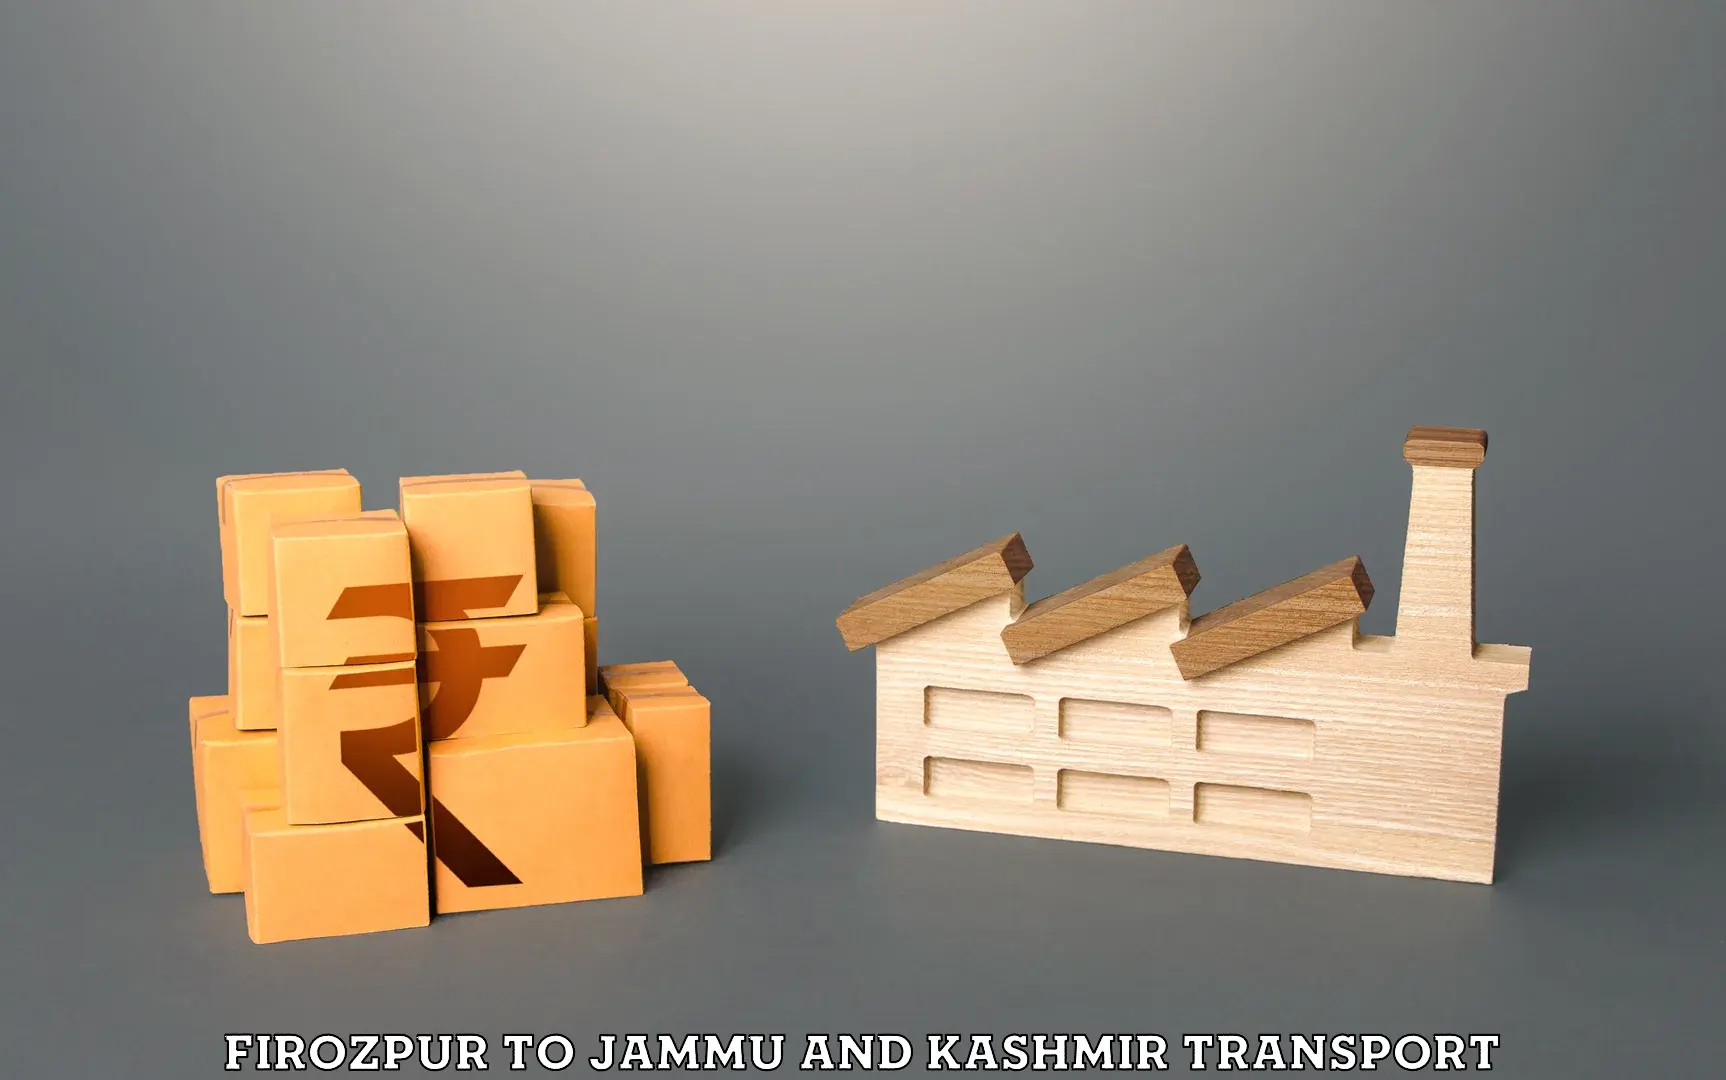 Shipping partner Firozpur to Srinagar Kashmir